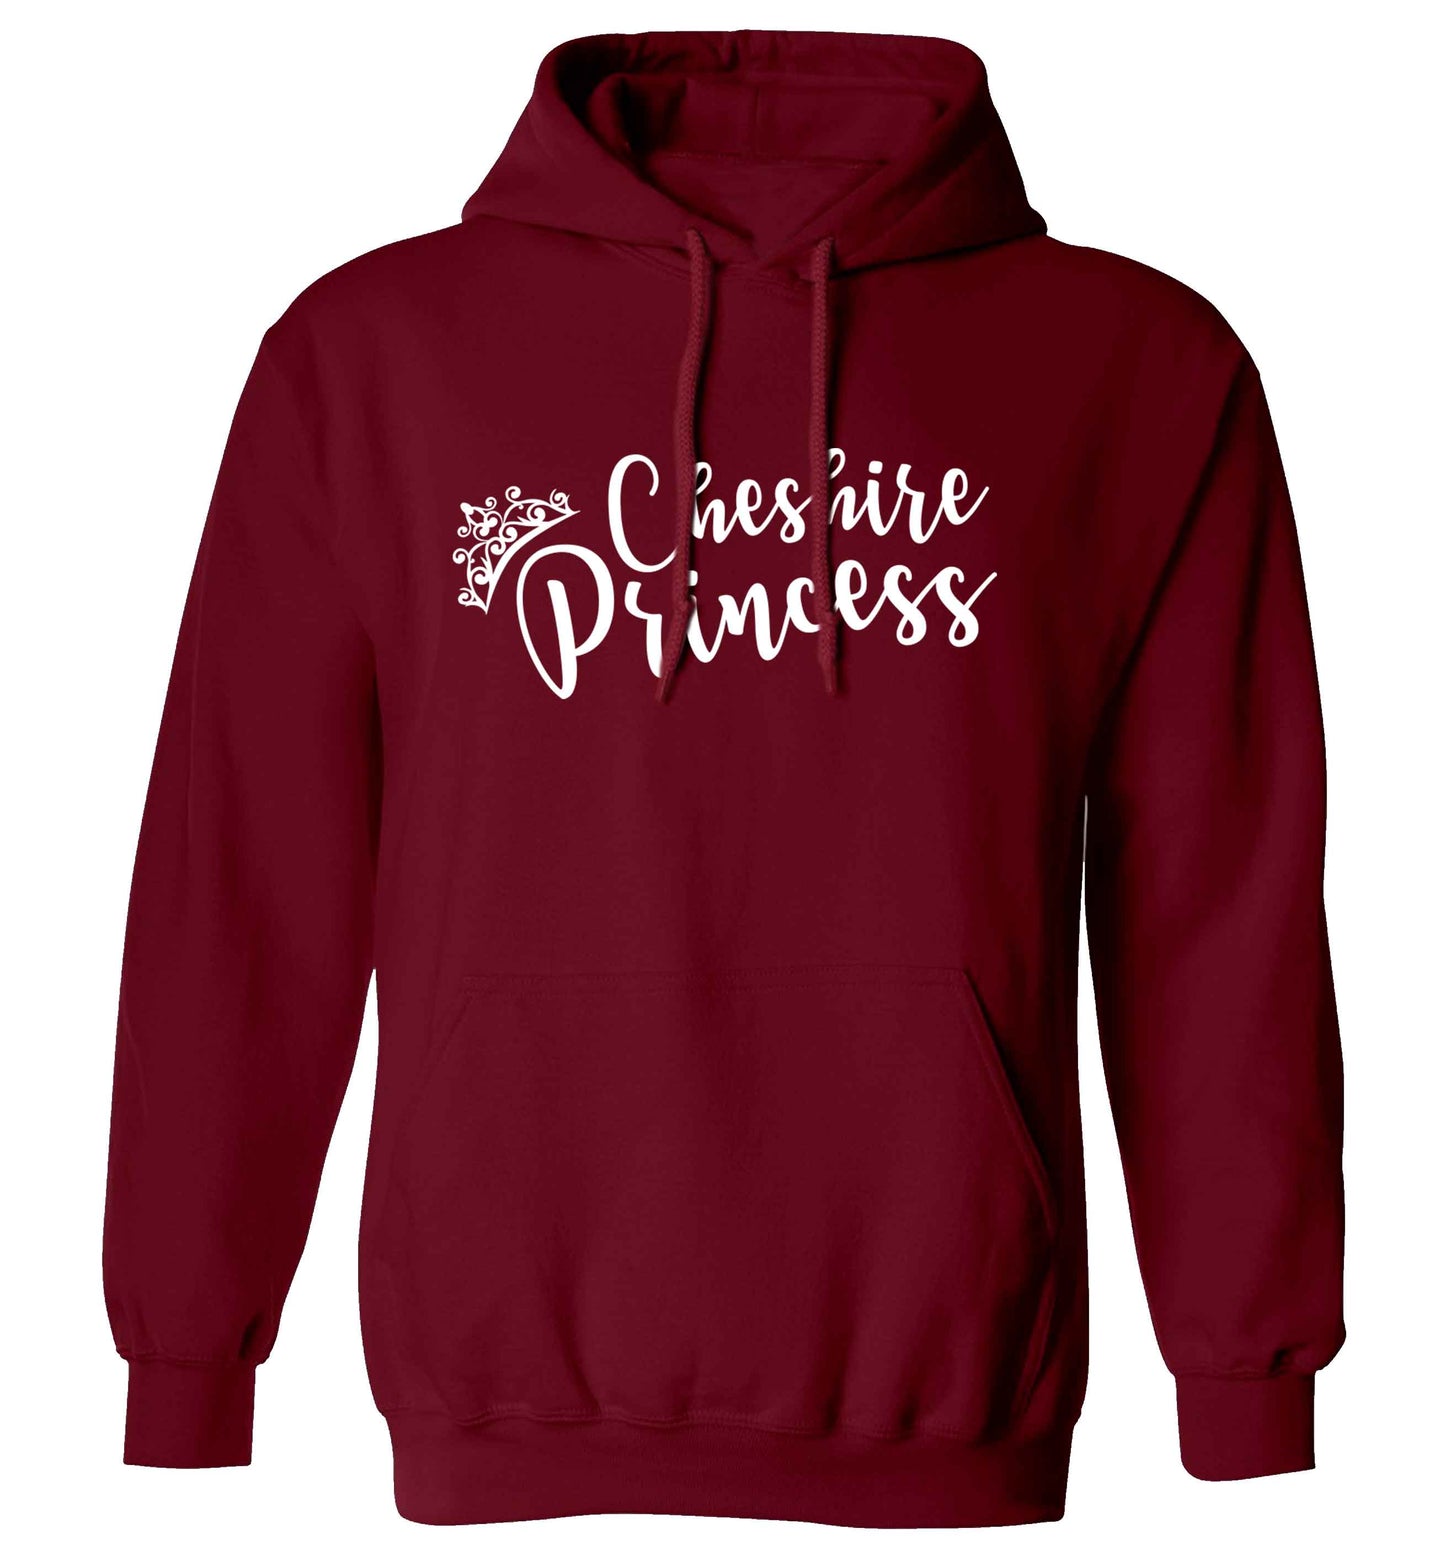 Cheshire princess adults unisex maroon hoodie 2XL